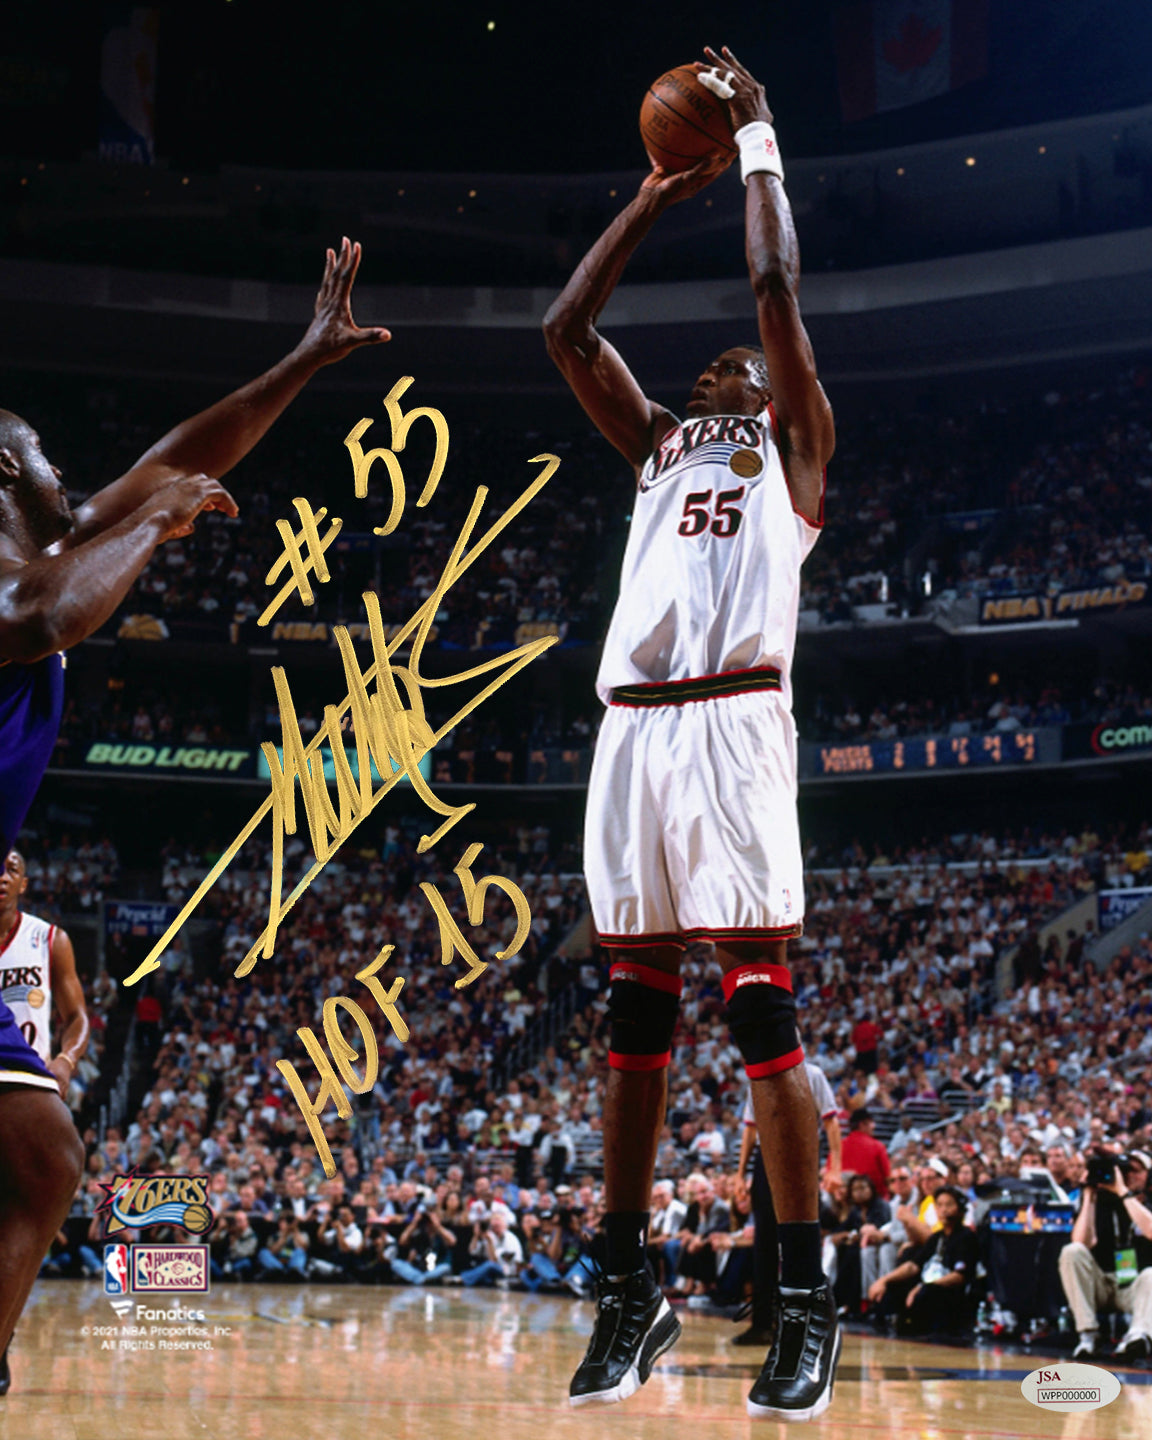 Dikembe Mutombo v Shaq Philadelphia 76ers Autographed Basketball Photo Inscribed Hall of Fame - Dynasty Sports & Framing 